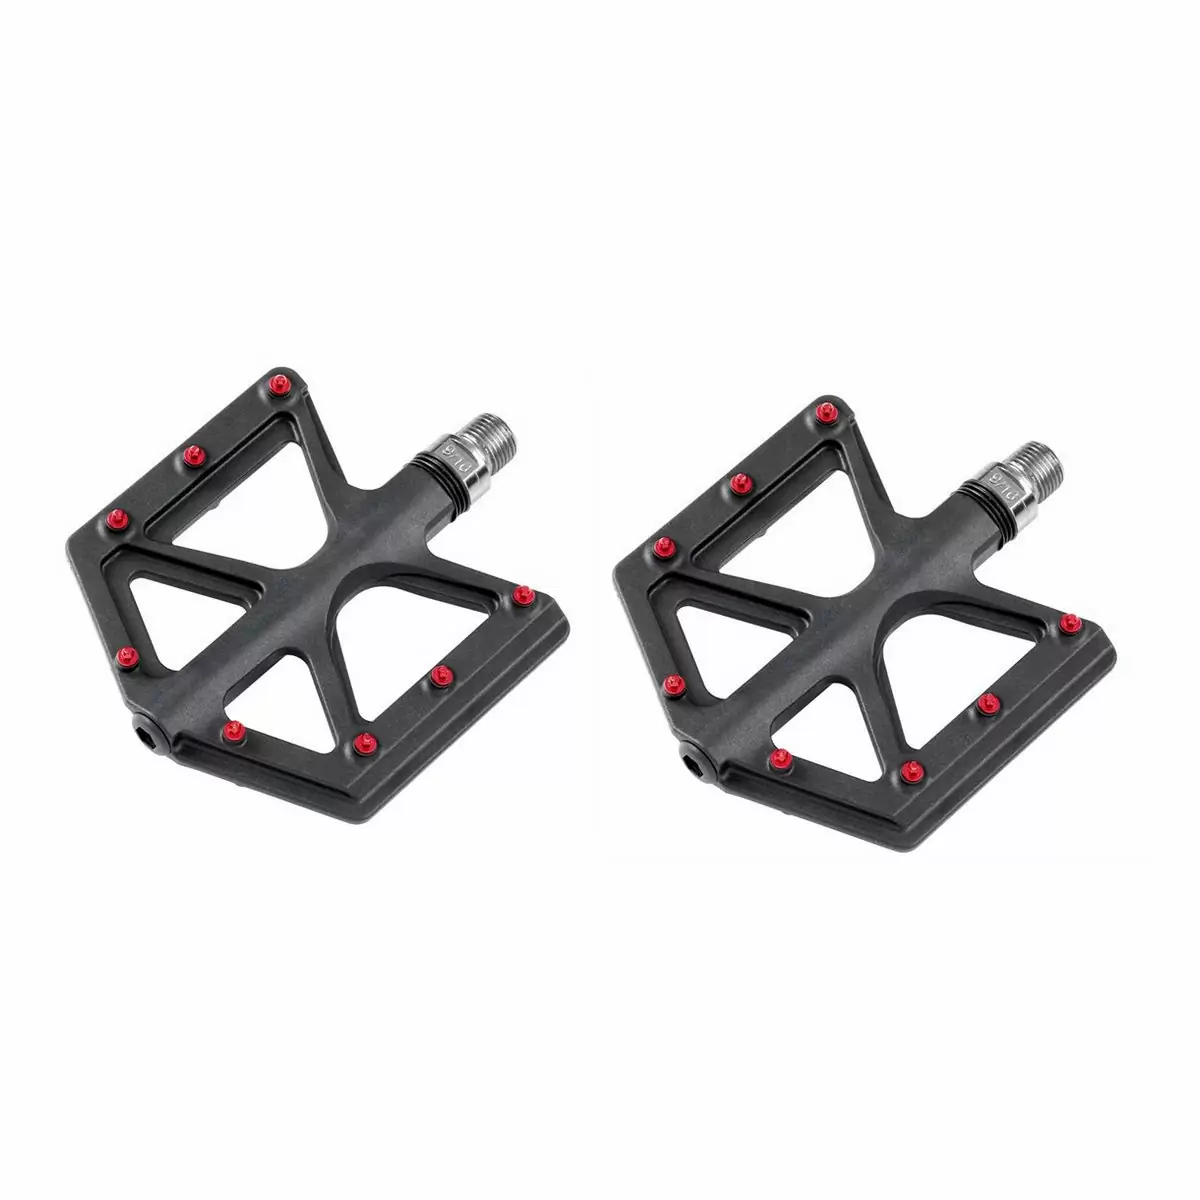 Pair flat pedals ZP-D213 anti-slip ultralight carbon / resin - image